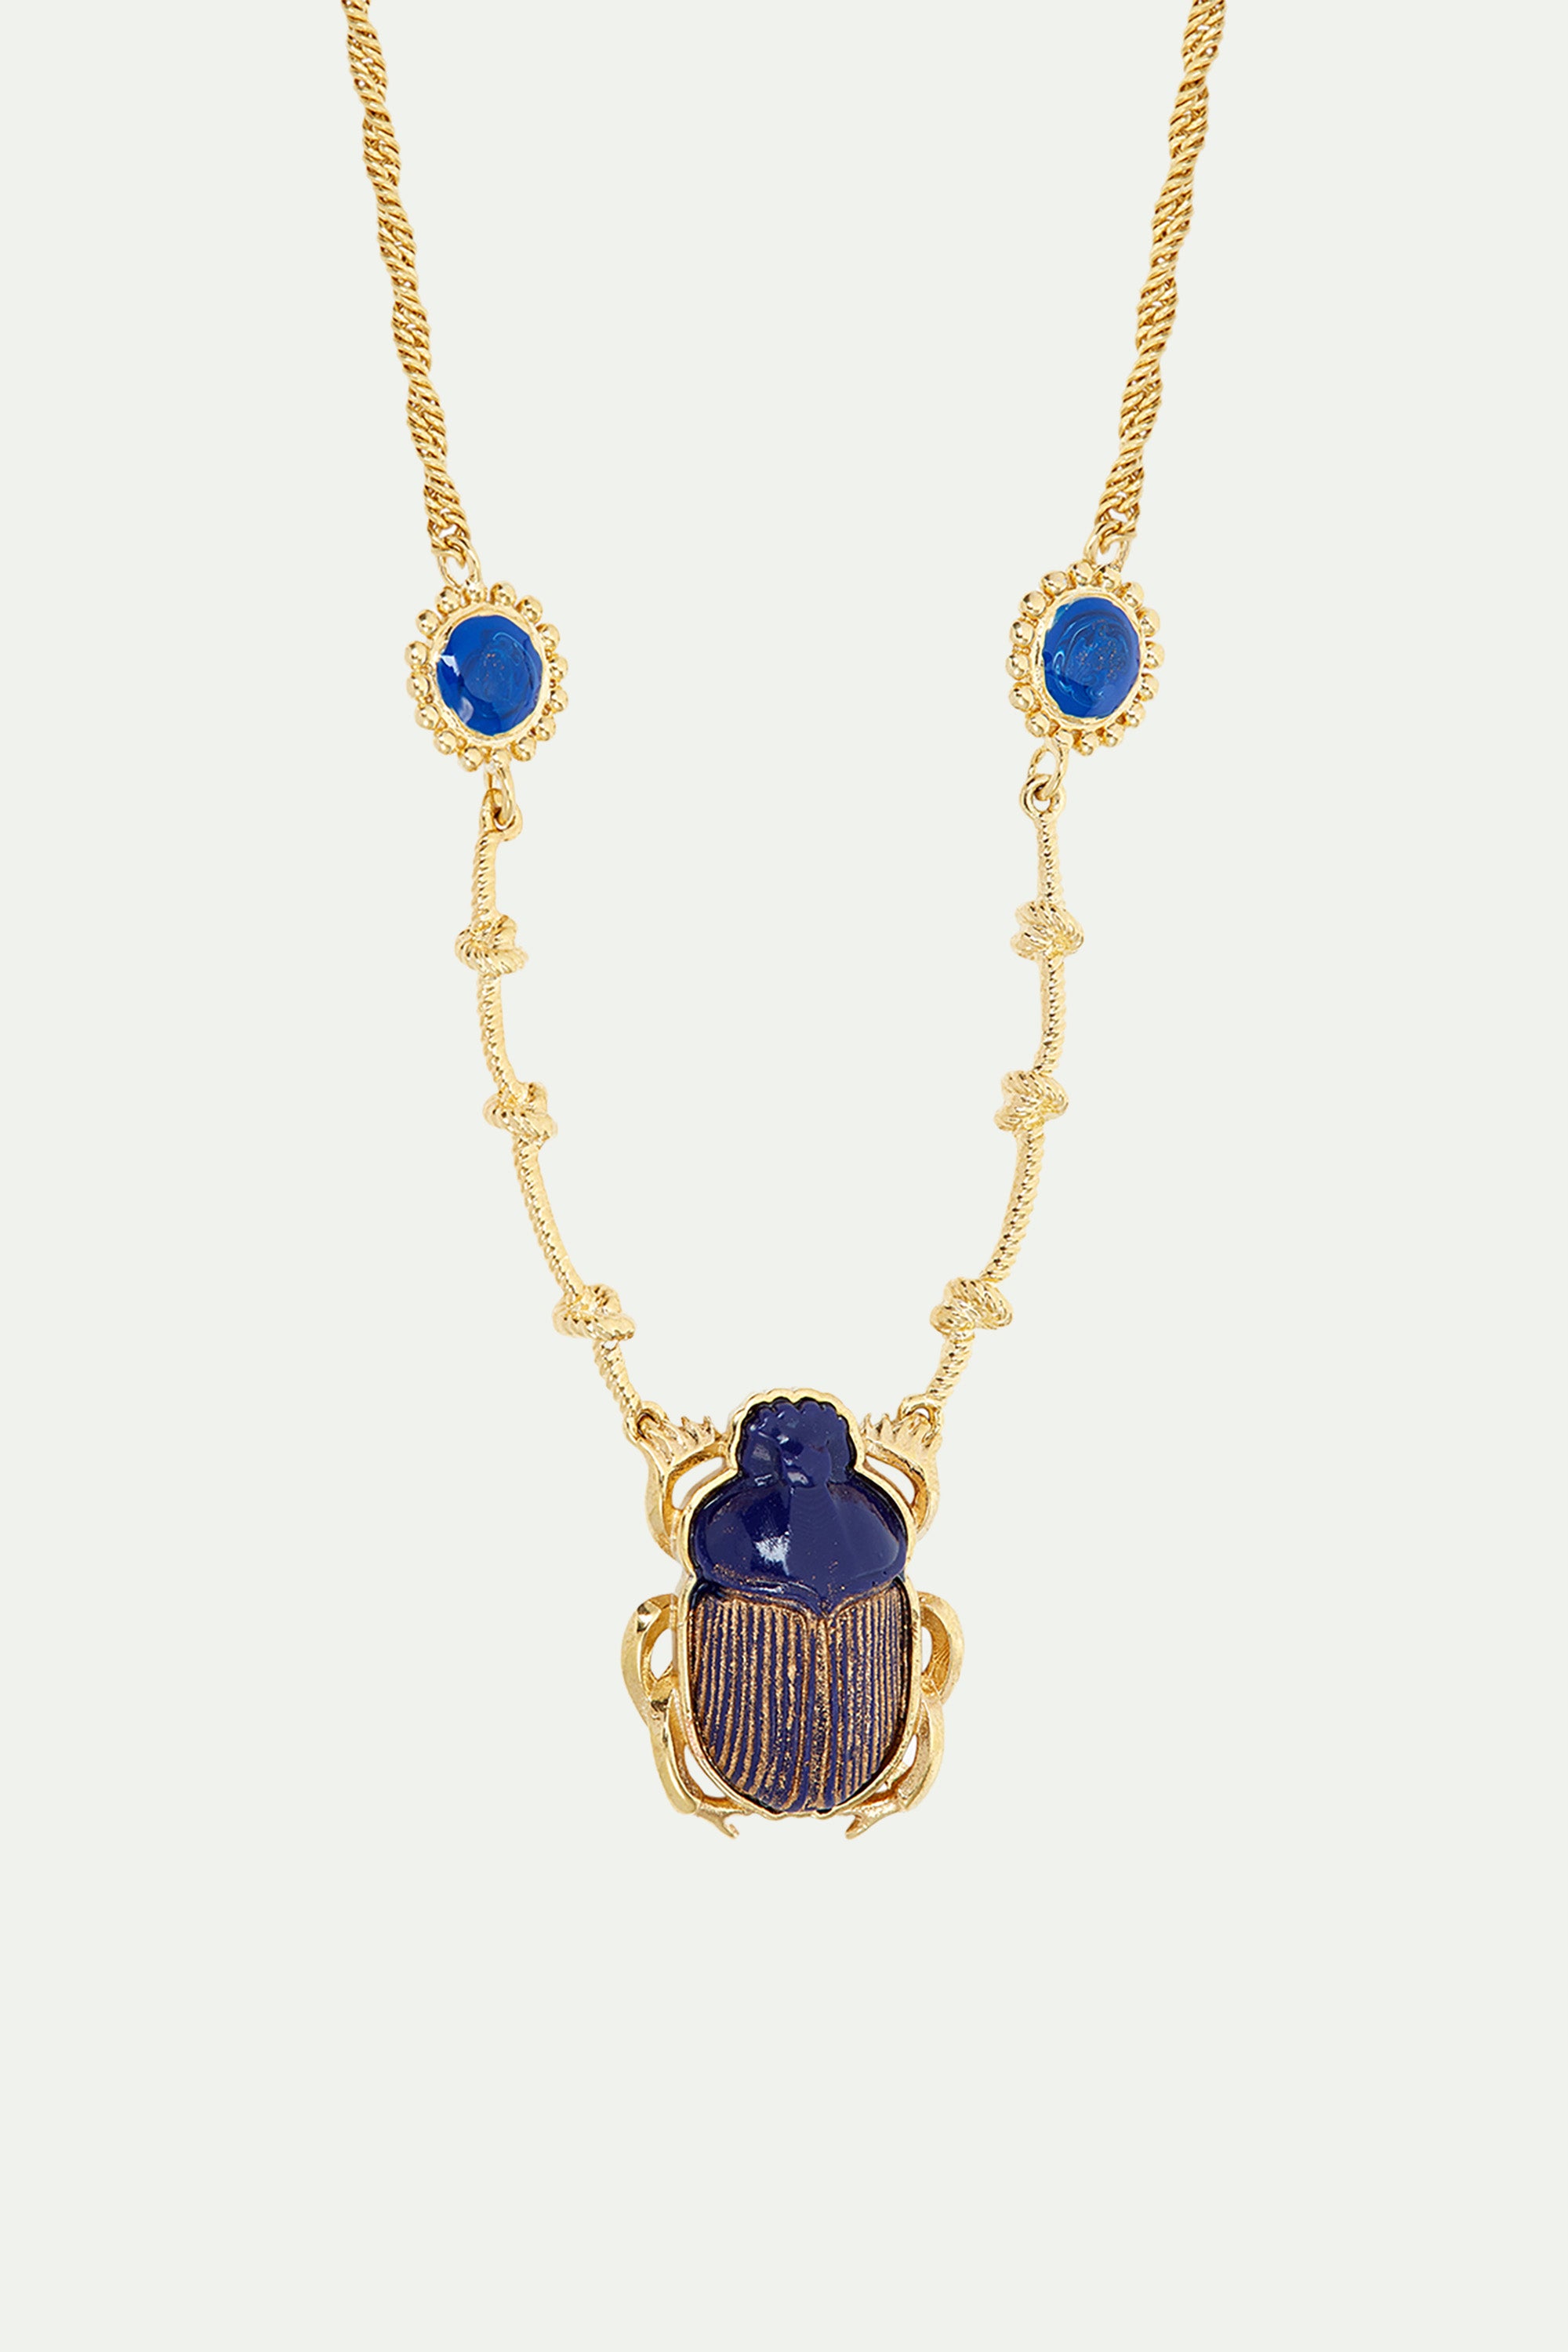 Sacred egyptian blue scarab beetle pendant necklace